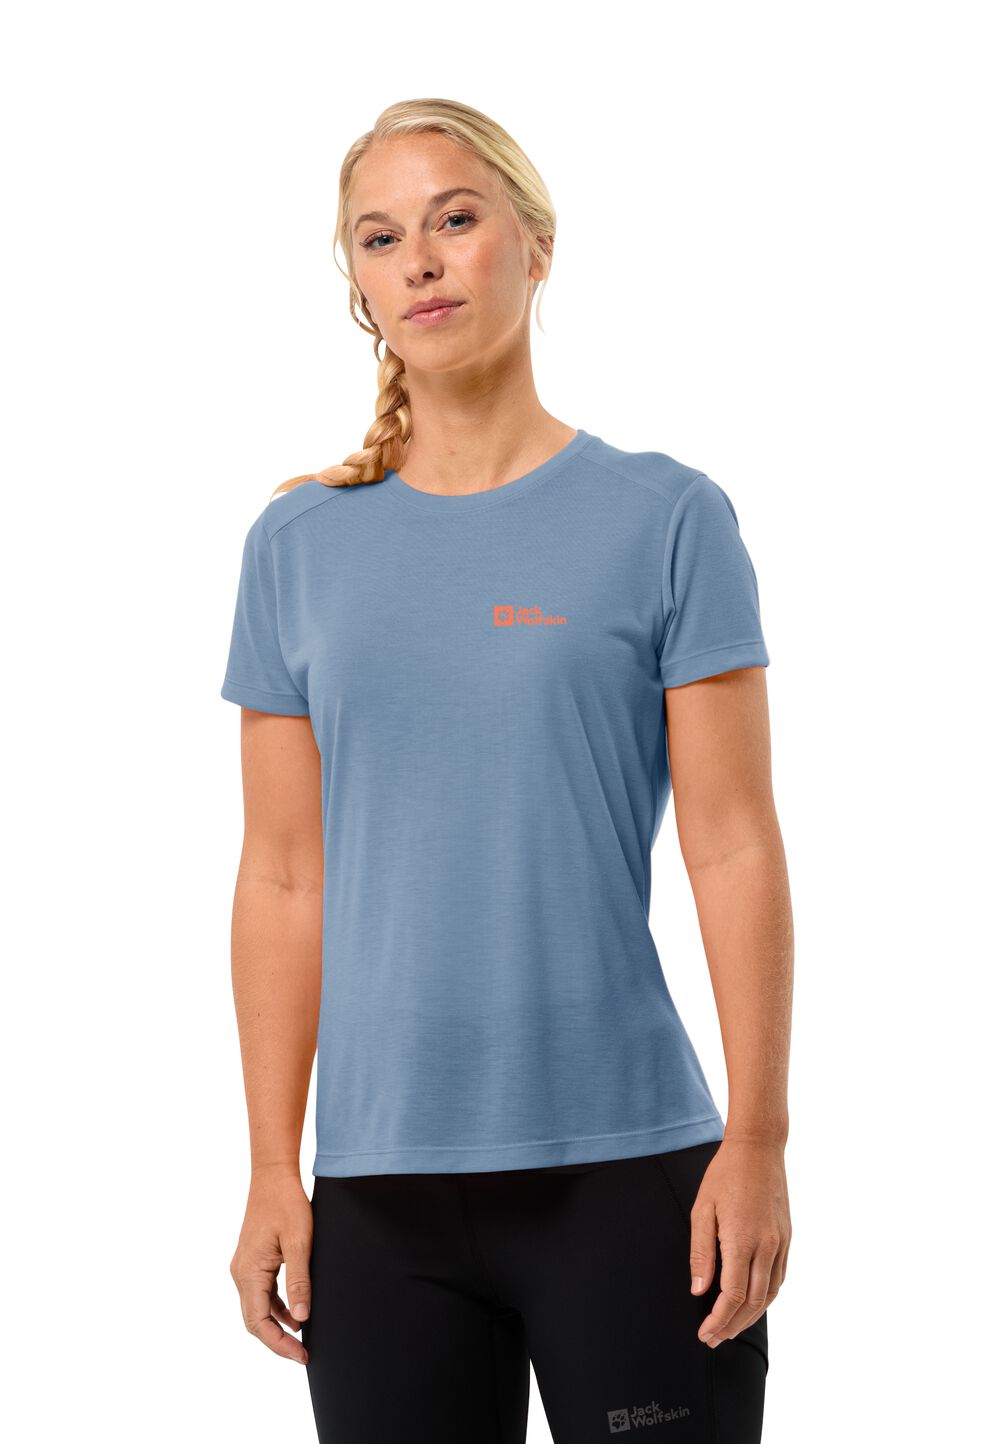 Jack Wolfskin Vonnan S S T-Shirt Women Functioneel shirt Dames XL elemental blue elemental blue